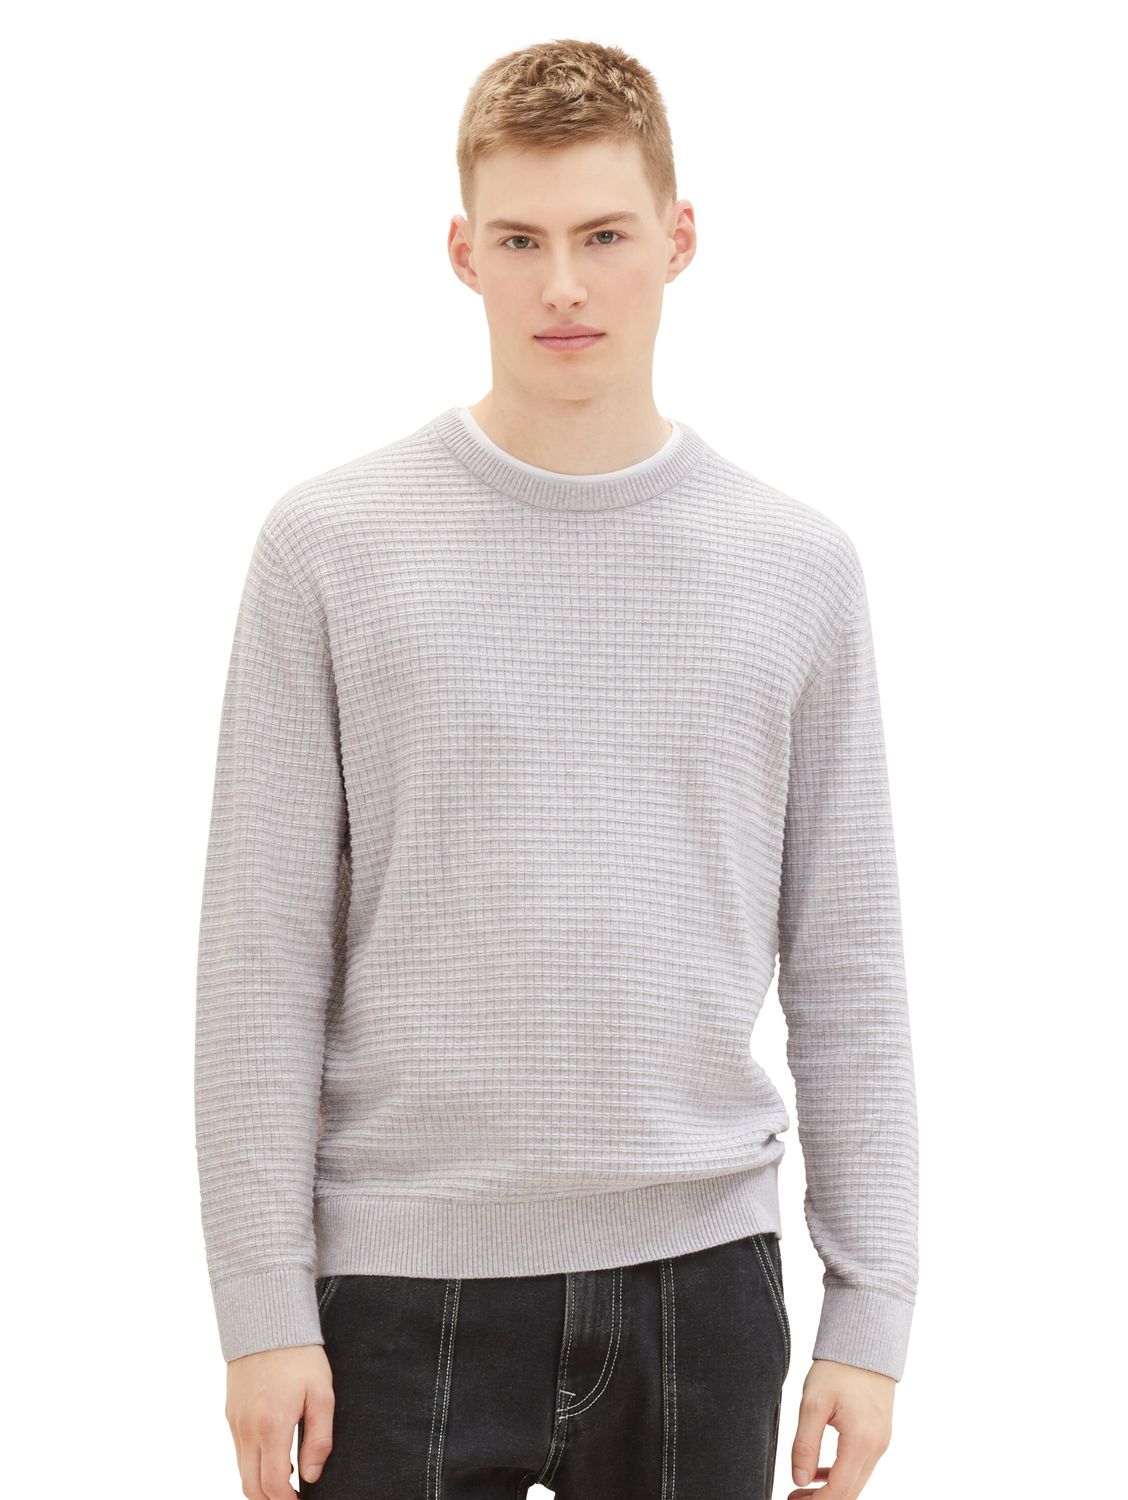 Пуловер TOM TAILOR Denim STRUCTURED DOUBLELAYER, серый пуловер tom tailor denim basic серый